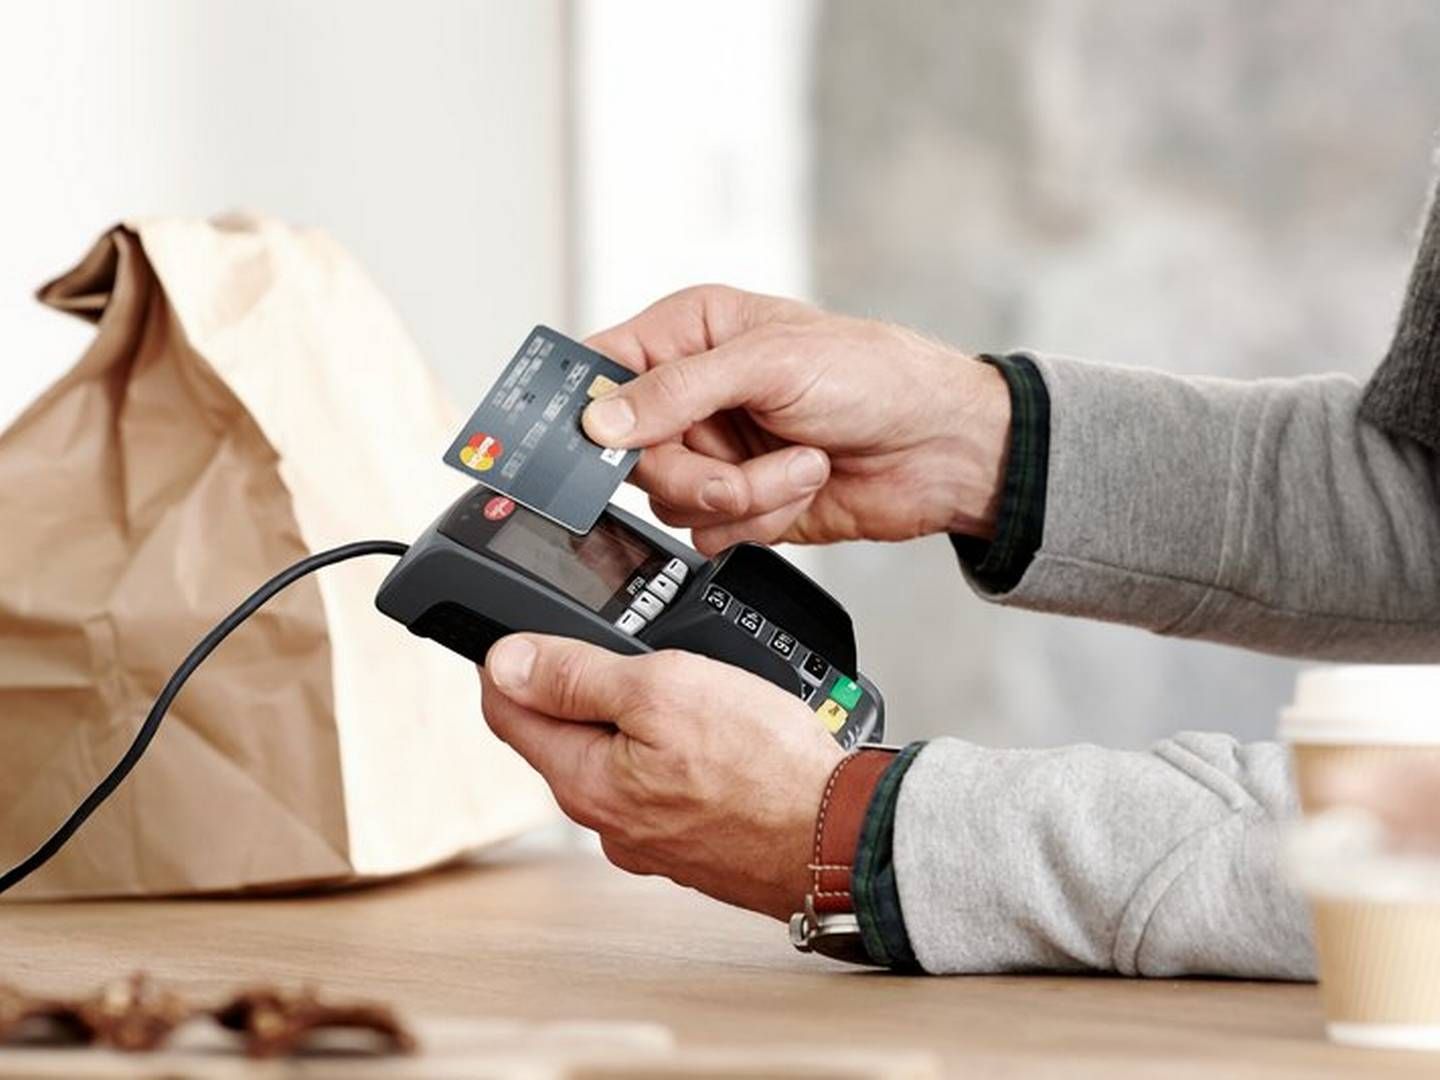 Dankort-gebyrene har stor betydning for kiosker, barer og bagerier med mange små betalinger. | Foto: Nets Pr